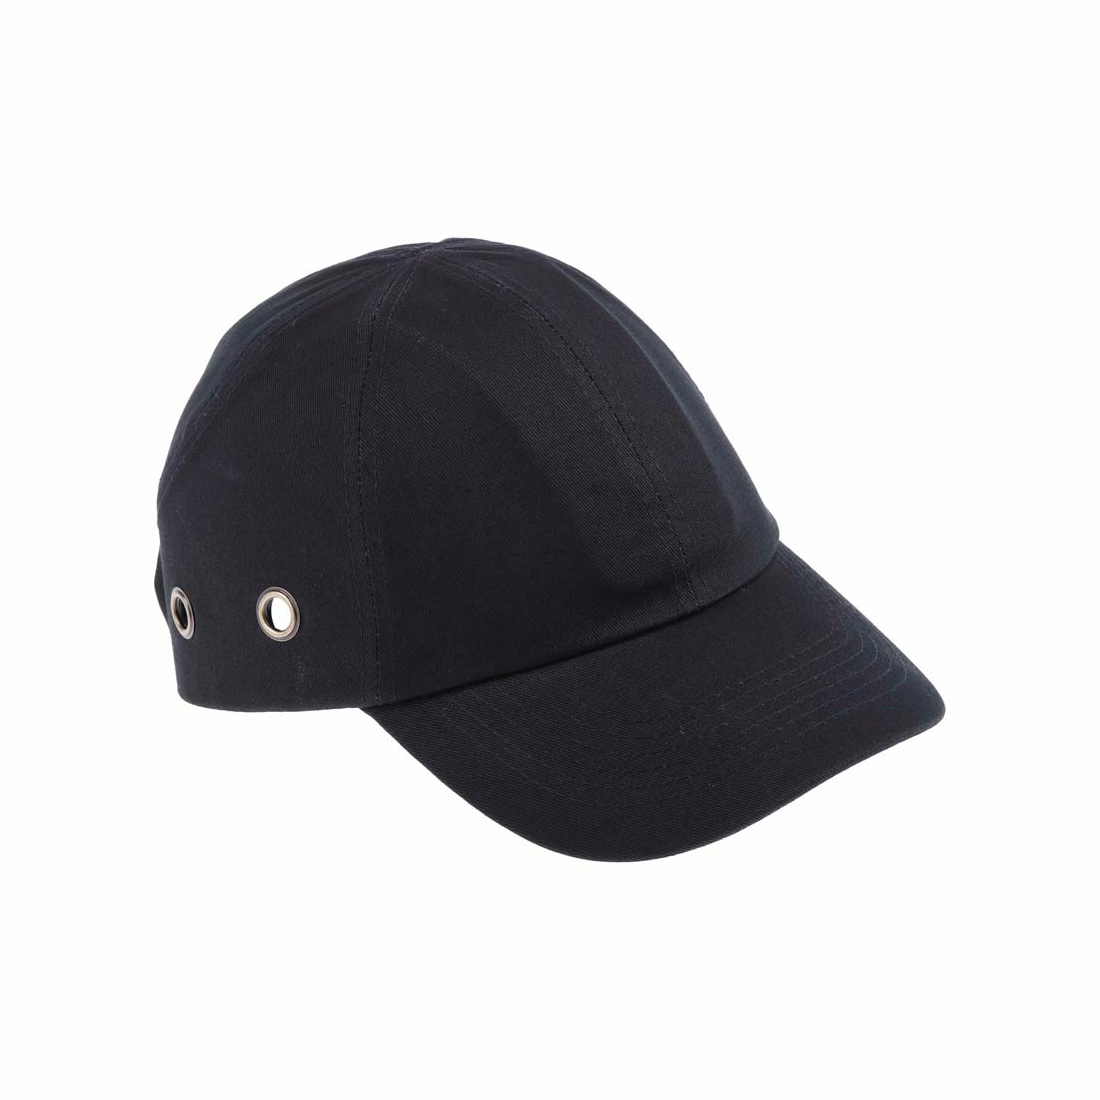 RS PRO Black Long Bump Cap, ABS Protective Material